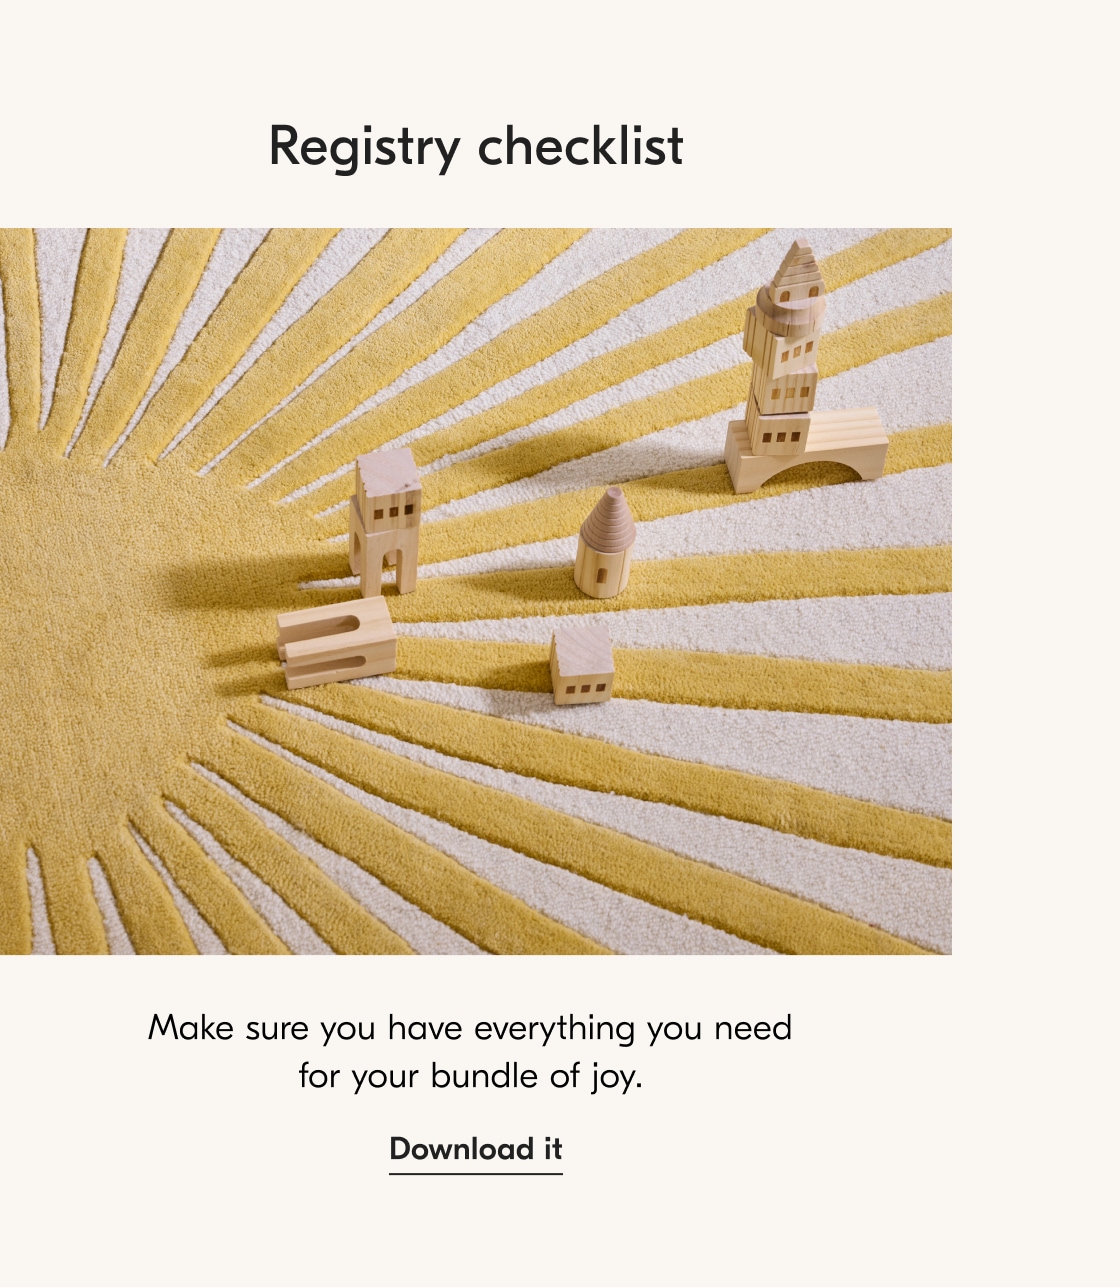 Registry checklist